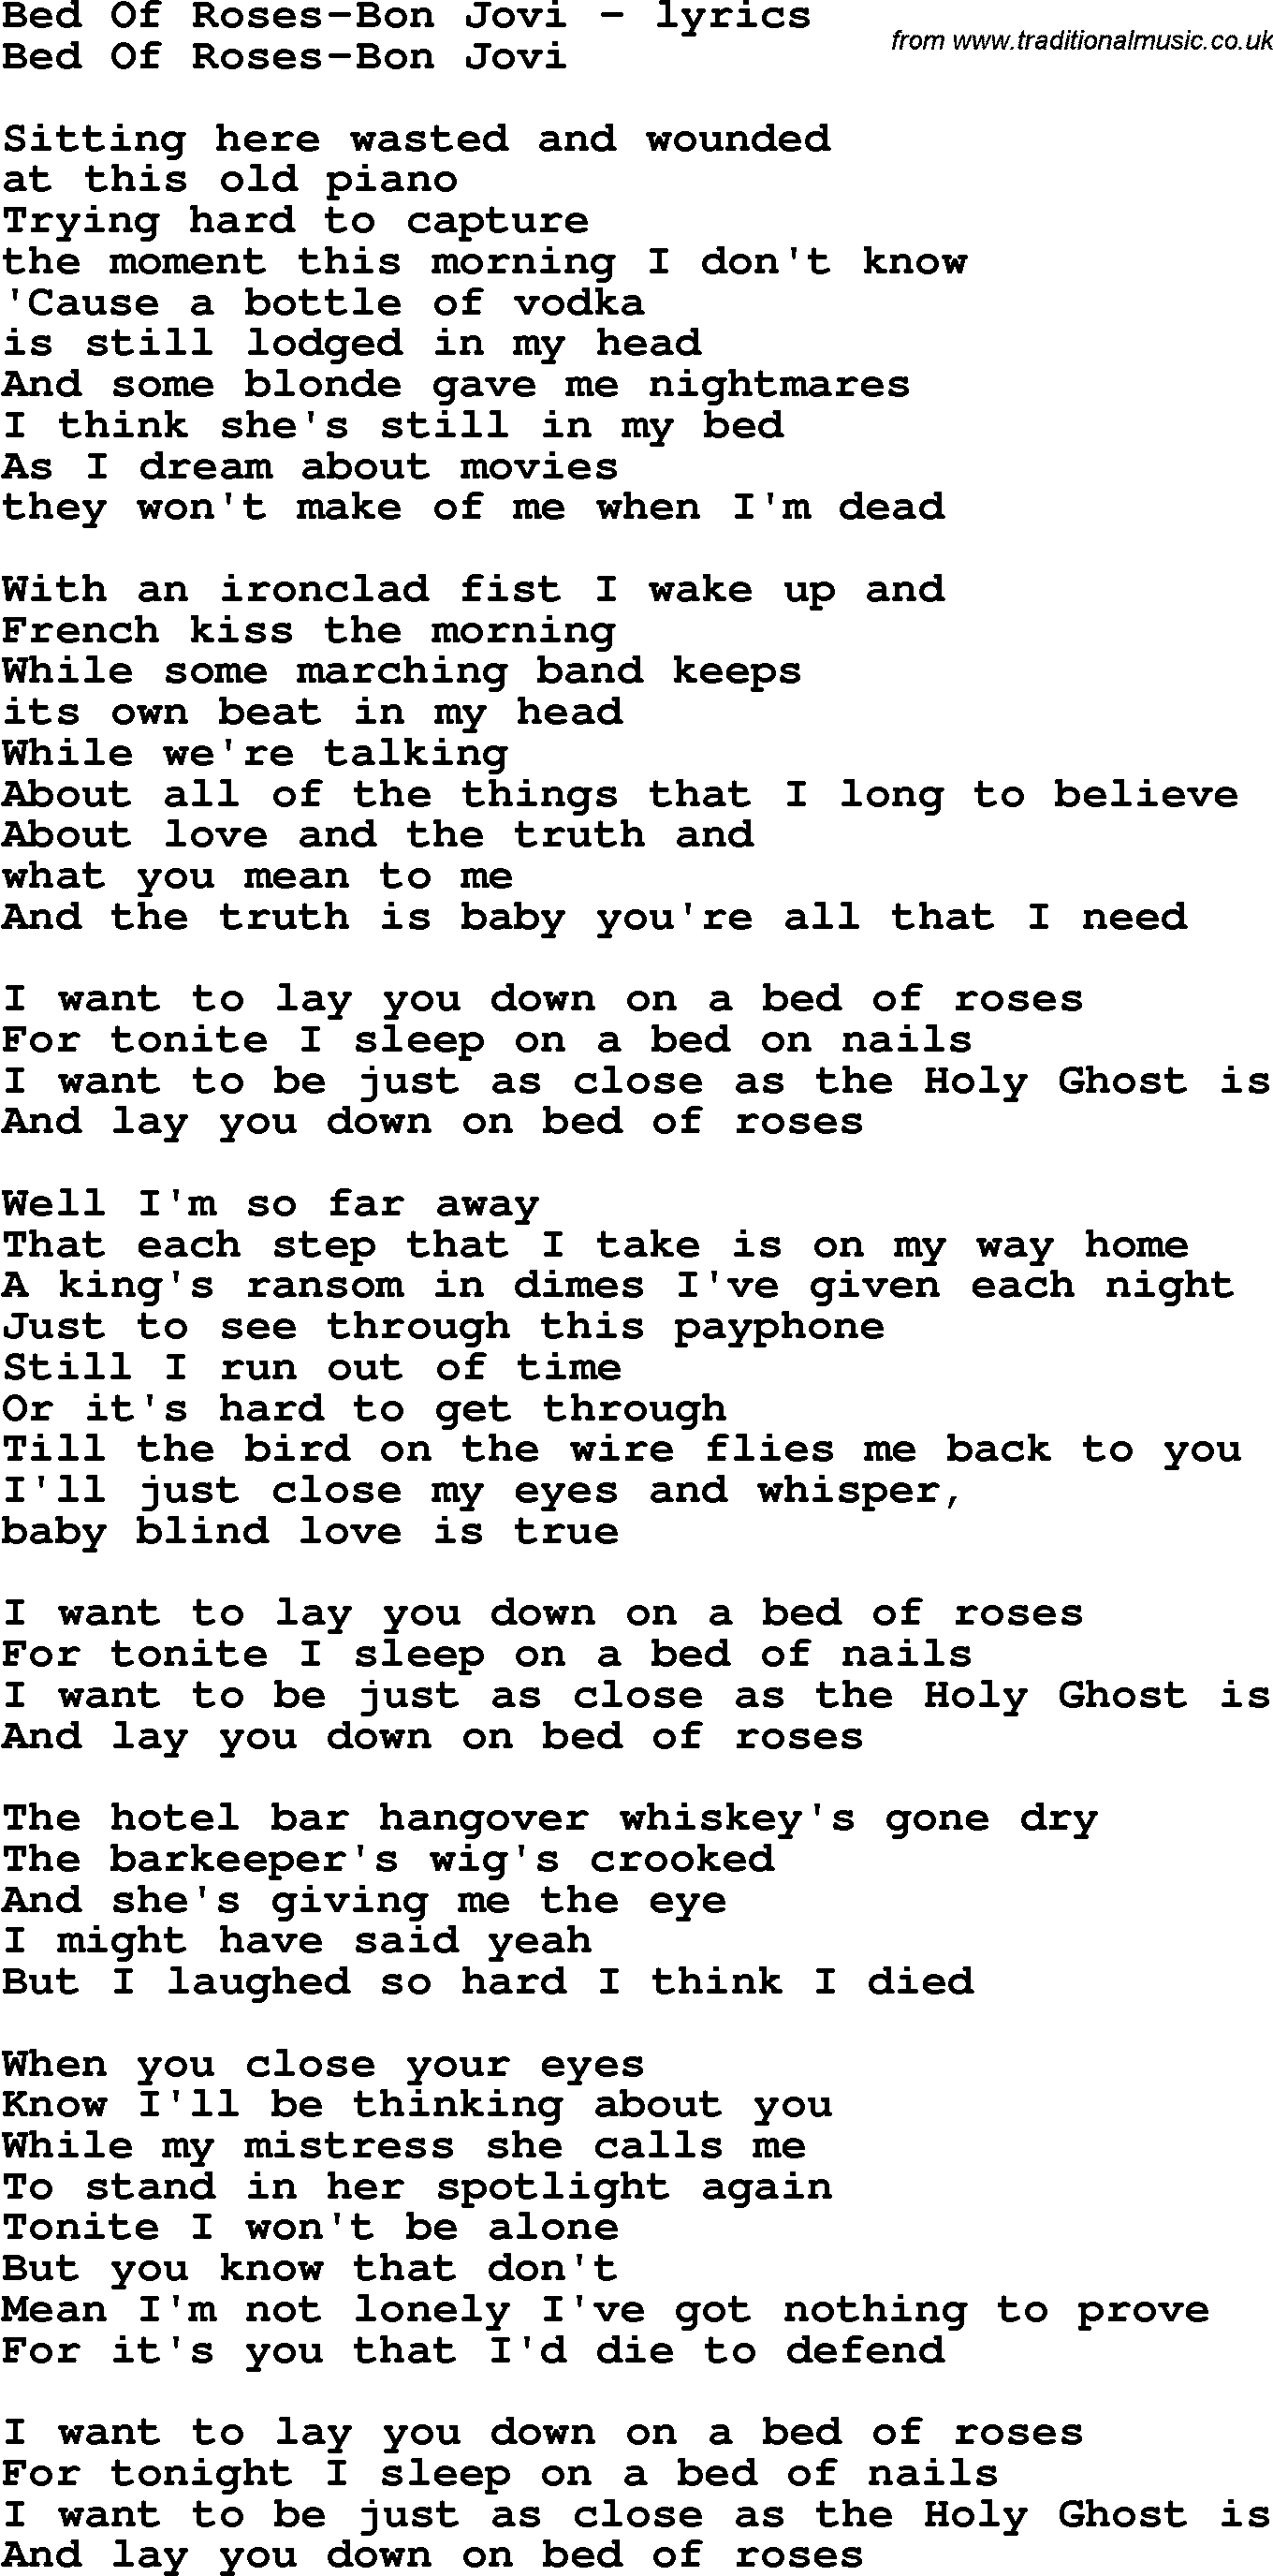 Bed: Bed Of Roses Lyrics
